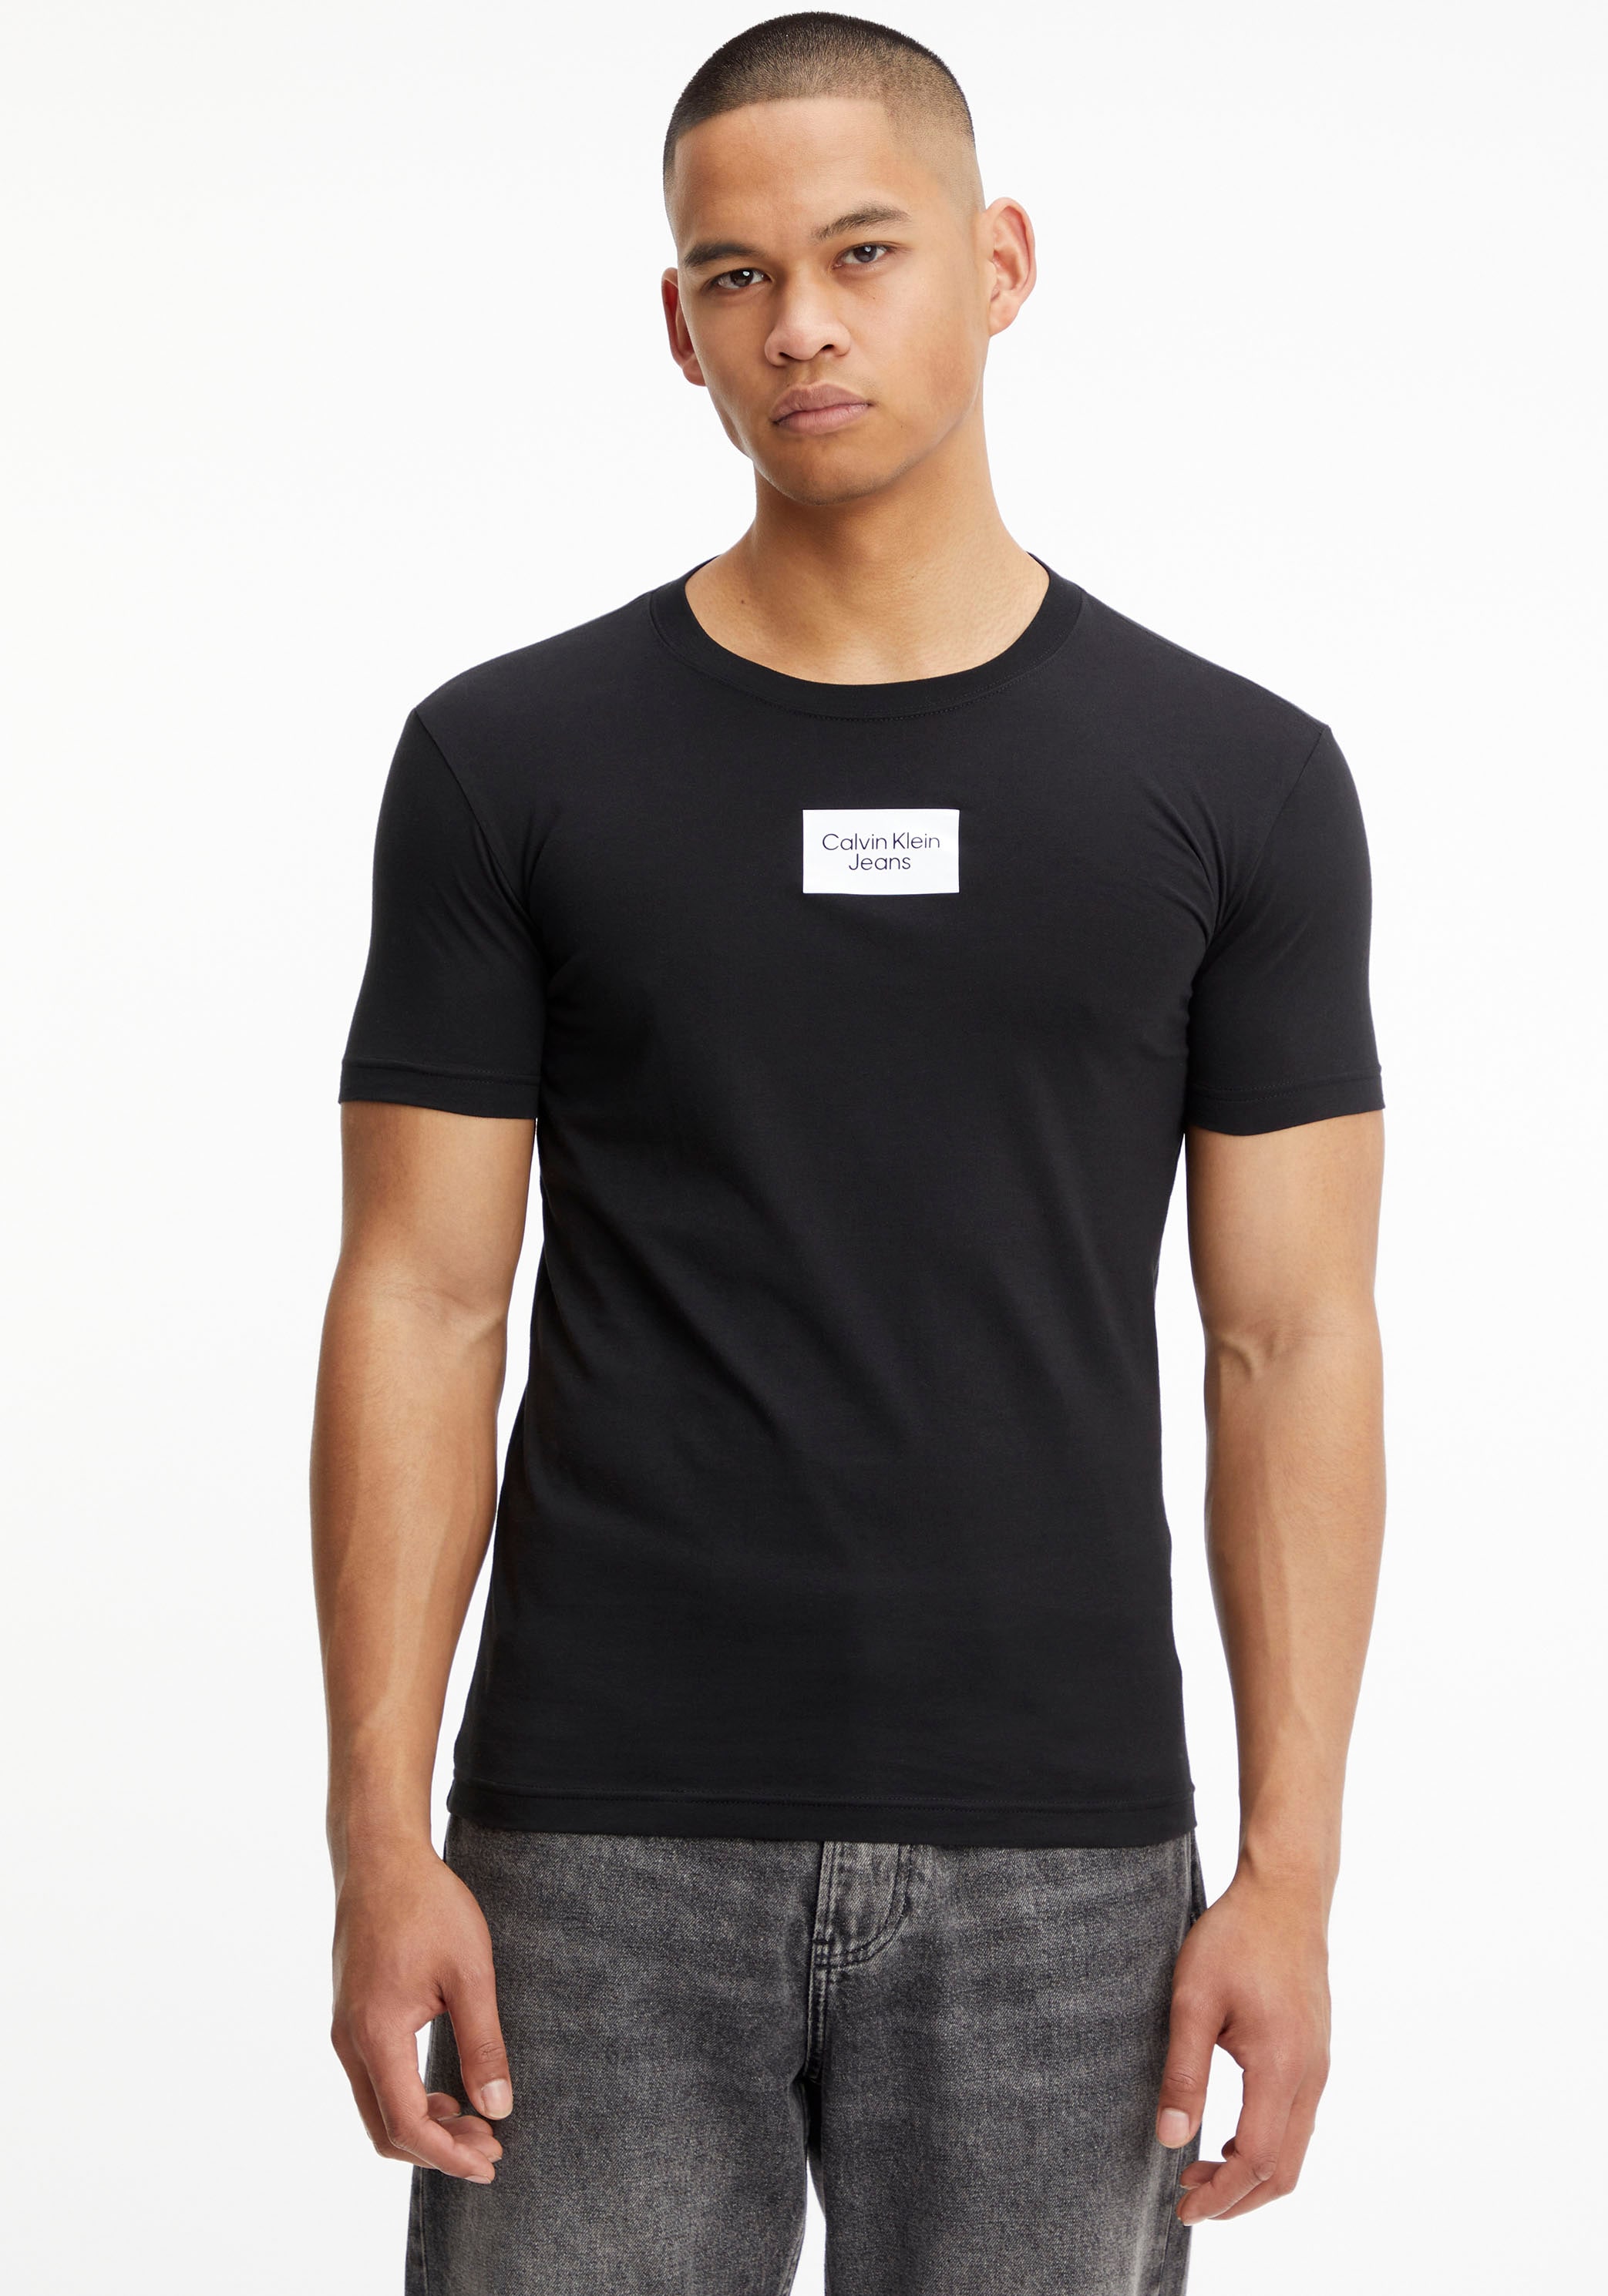 CENTER T-Shirt TEE«, Jeans OTTO mit shoppen online »SMALL BOX Klein bei Logodruck Calvin